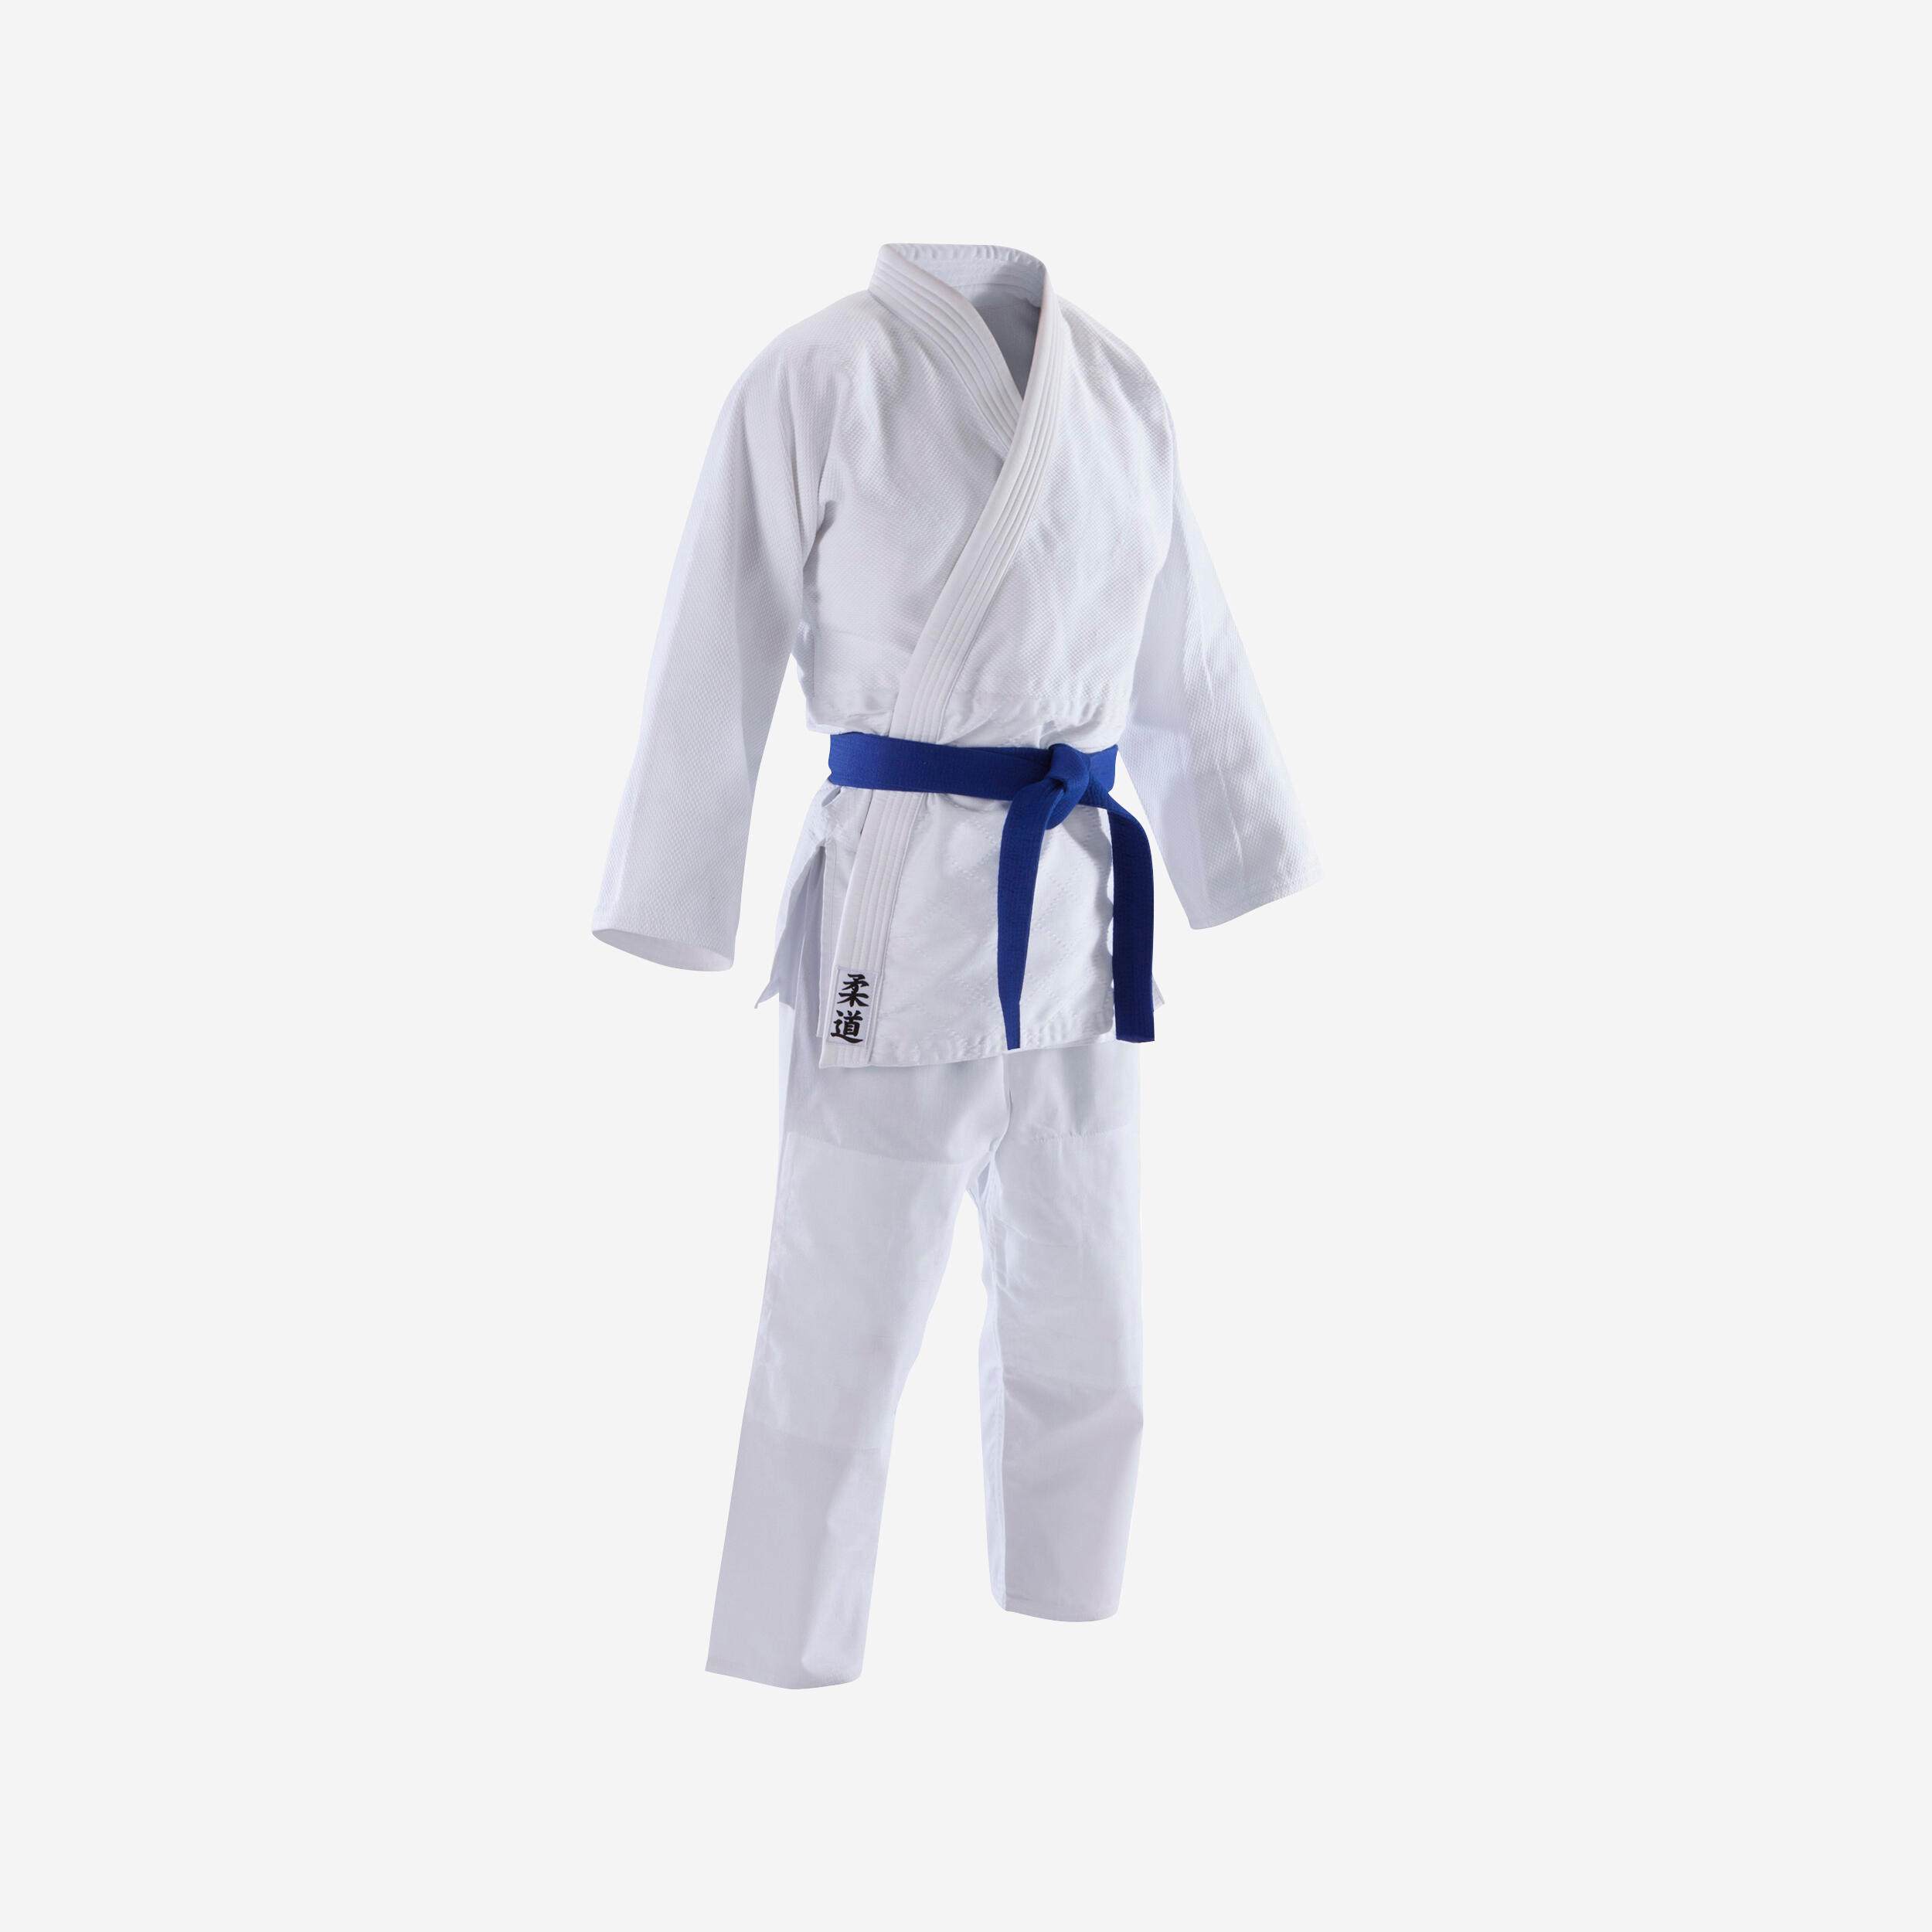 500 Adult Aikido/Judo Uniform - White 